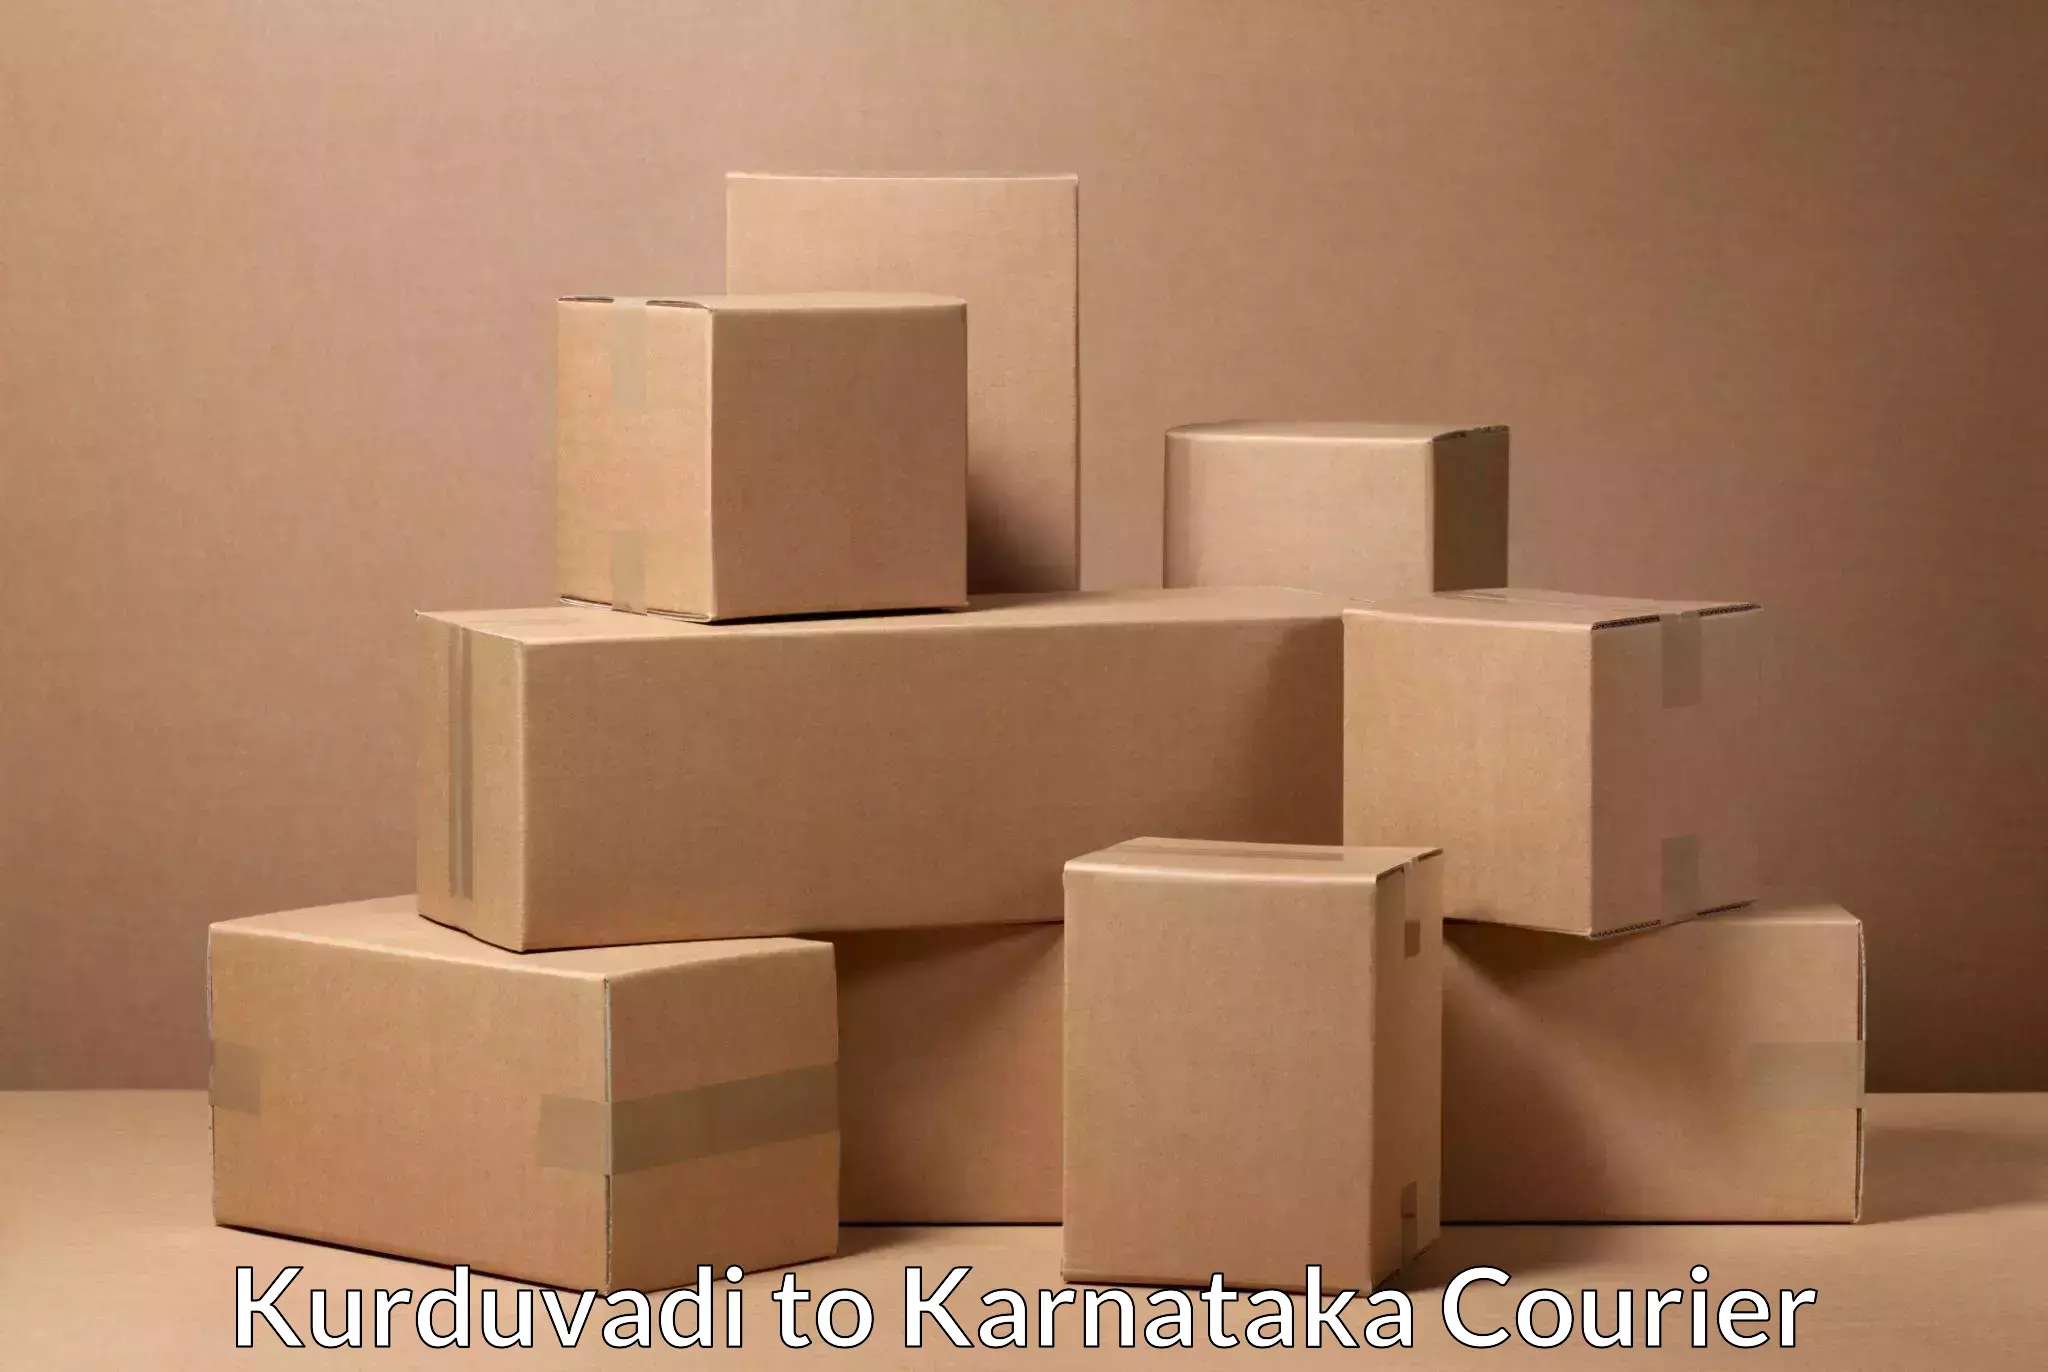 Rural area delivery Kurduvadi to Karnataka